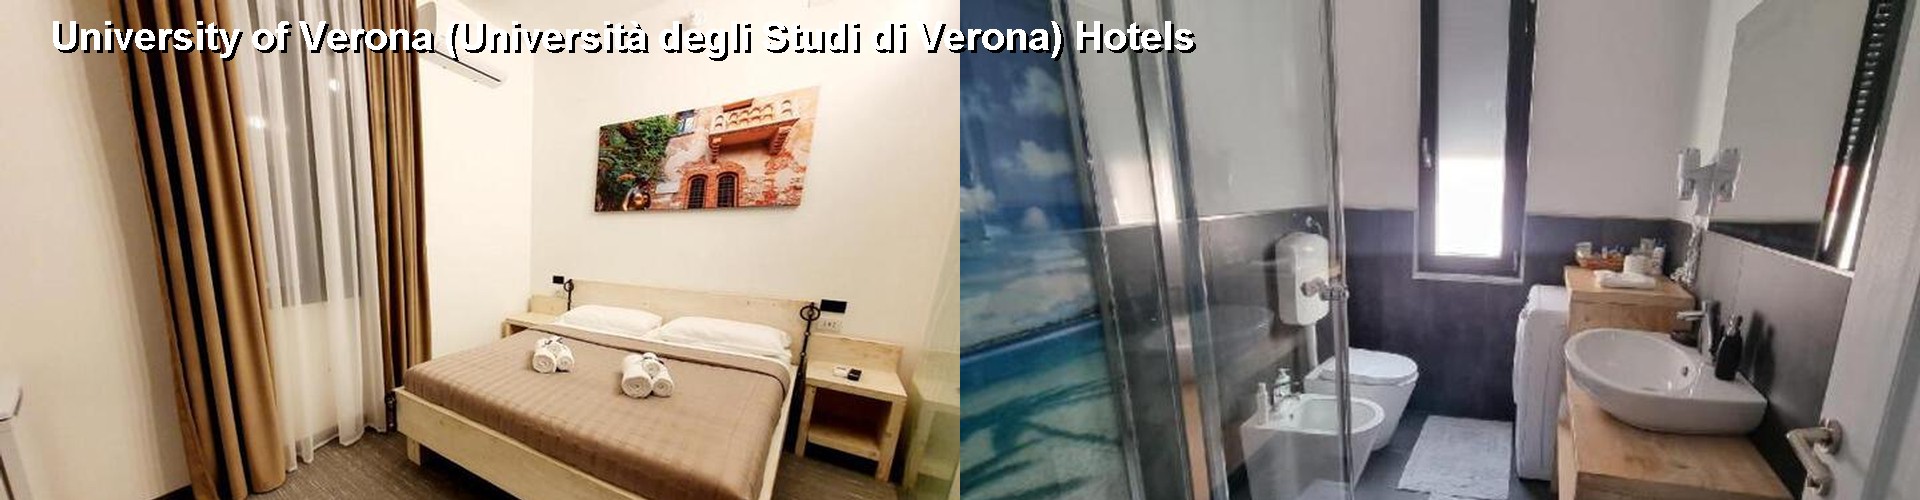 5 Best Hotels near University of Verona (Università degli Studi di Verona)